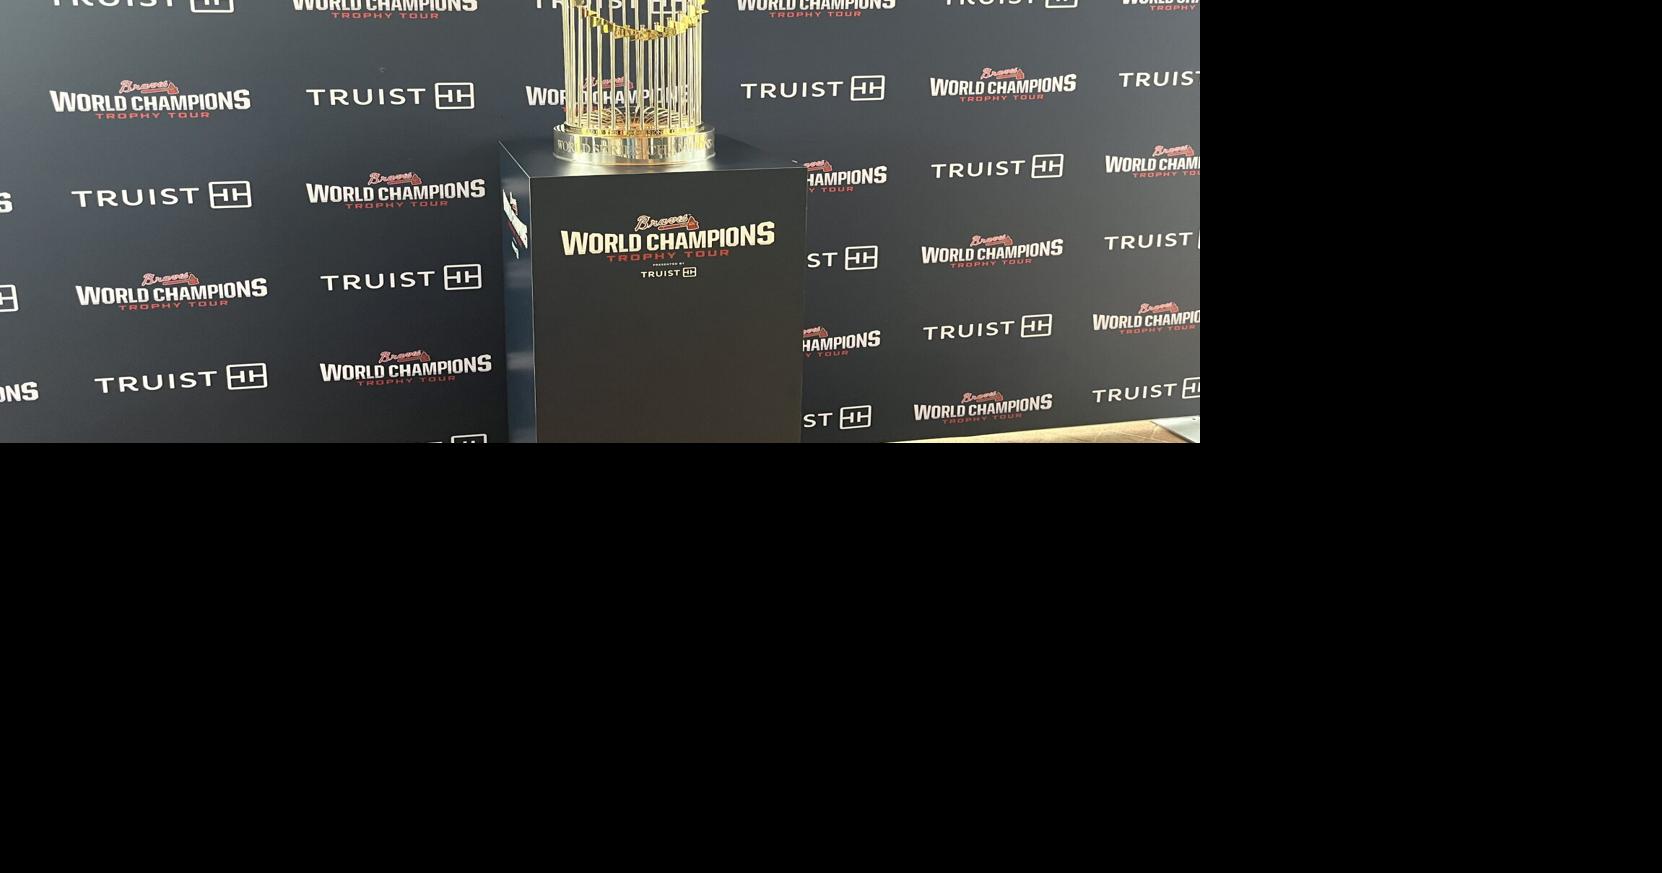 Atlanta Braves World Series Championship Trophy Tour Stop 